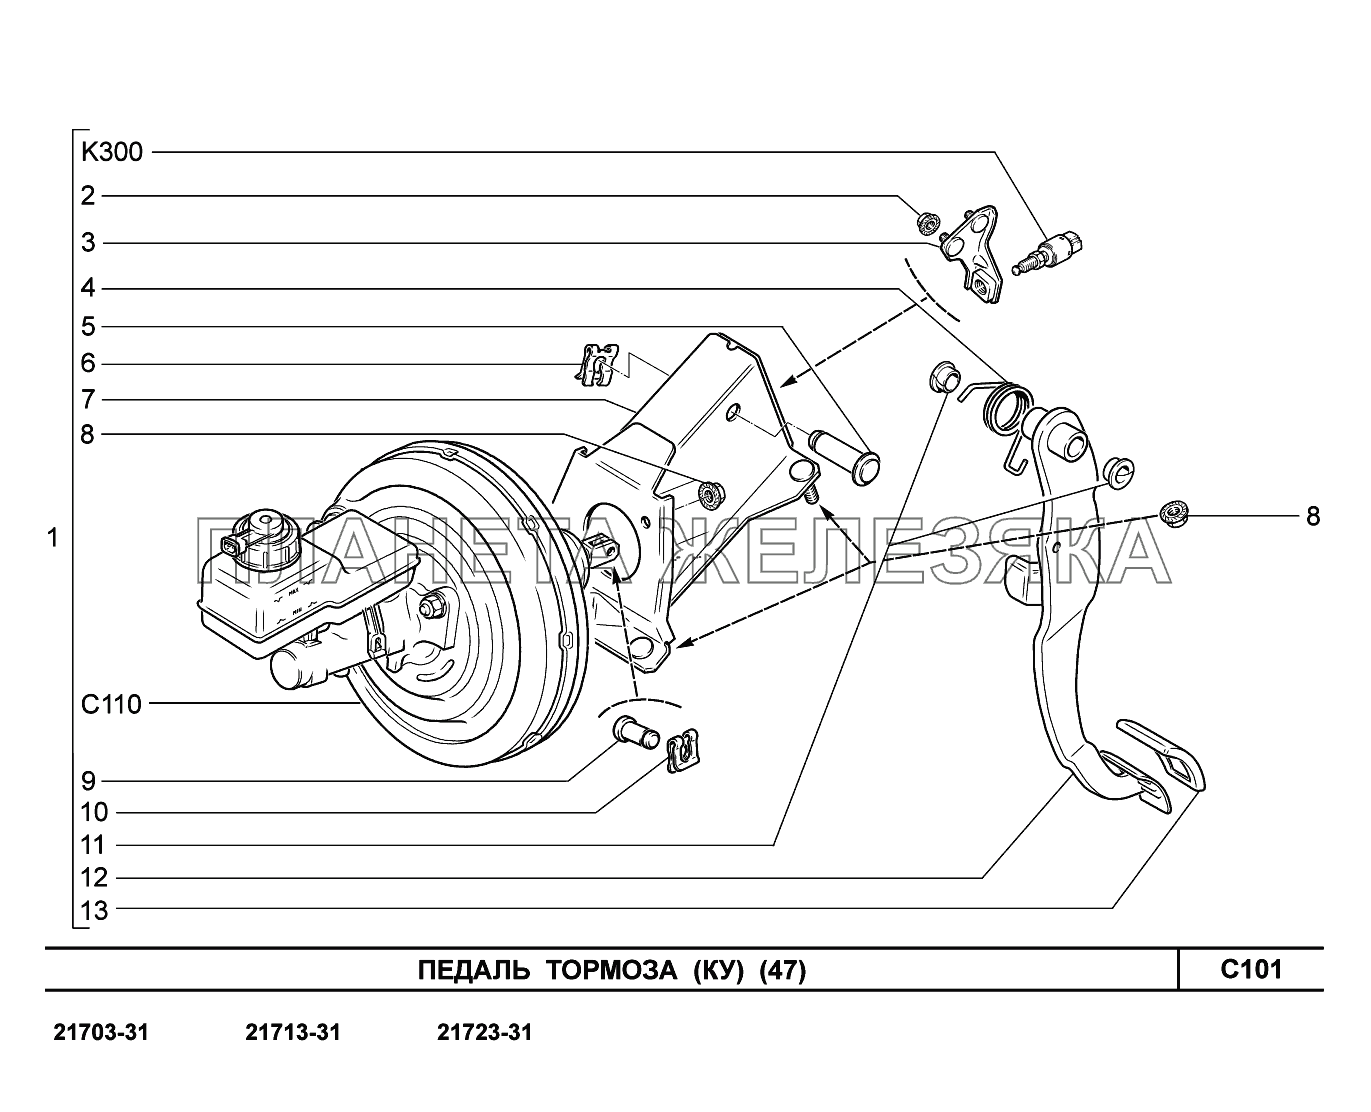 C101. Педаль тормоза ВАЗ-2170 